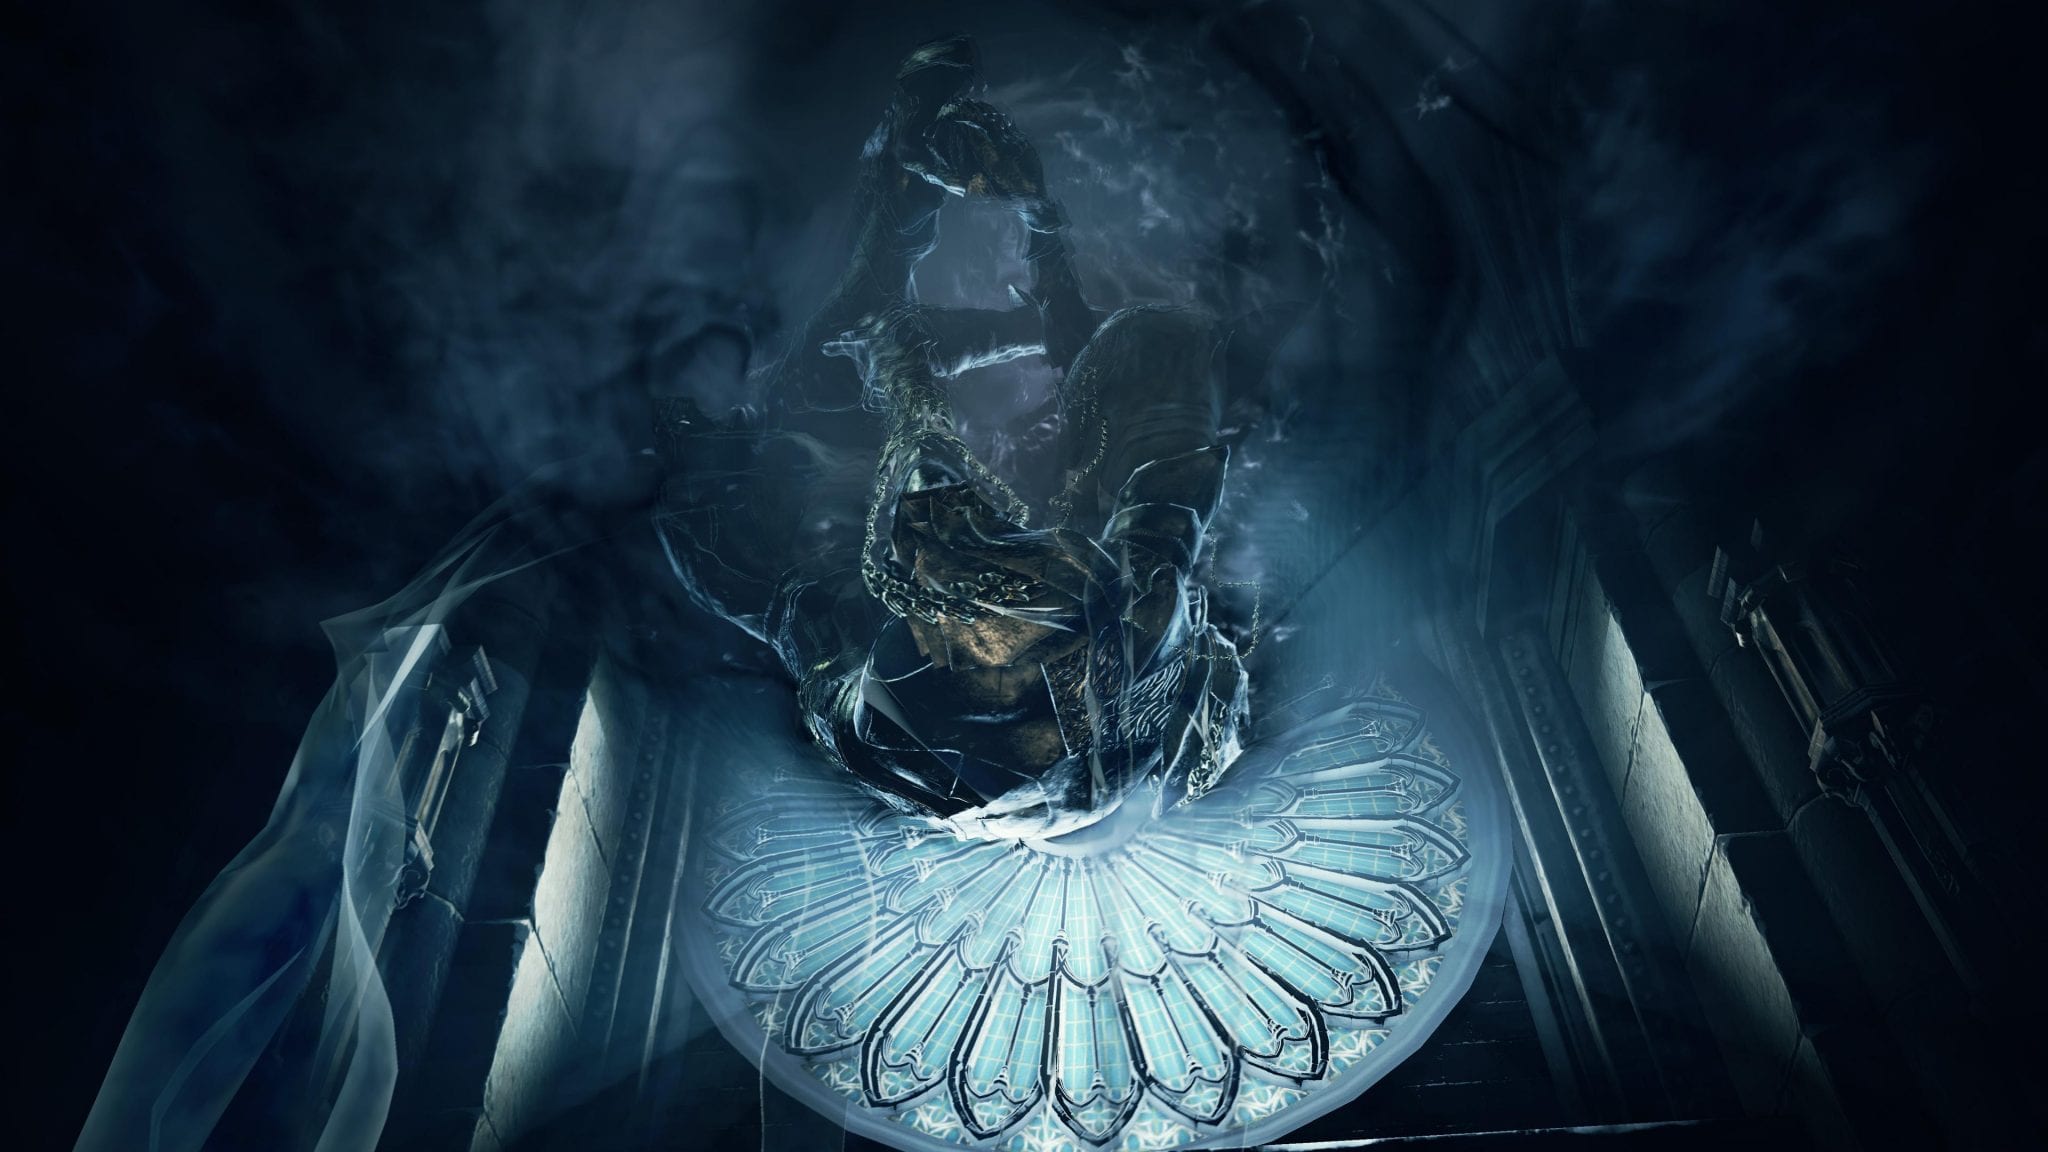 Dark Souls 3 screens are grim and creepy | PC Invasion